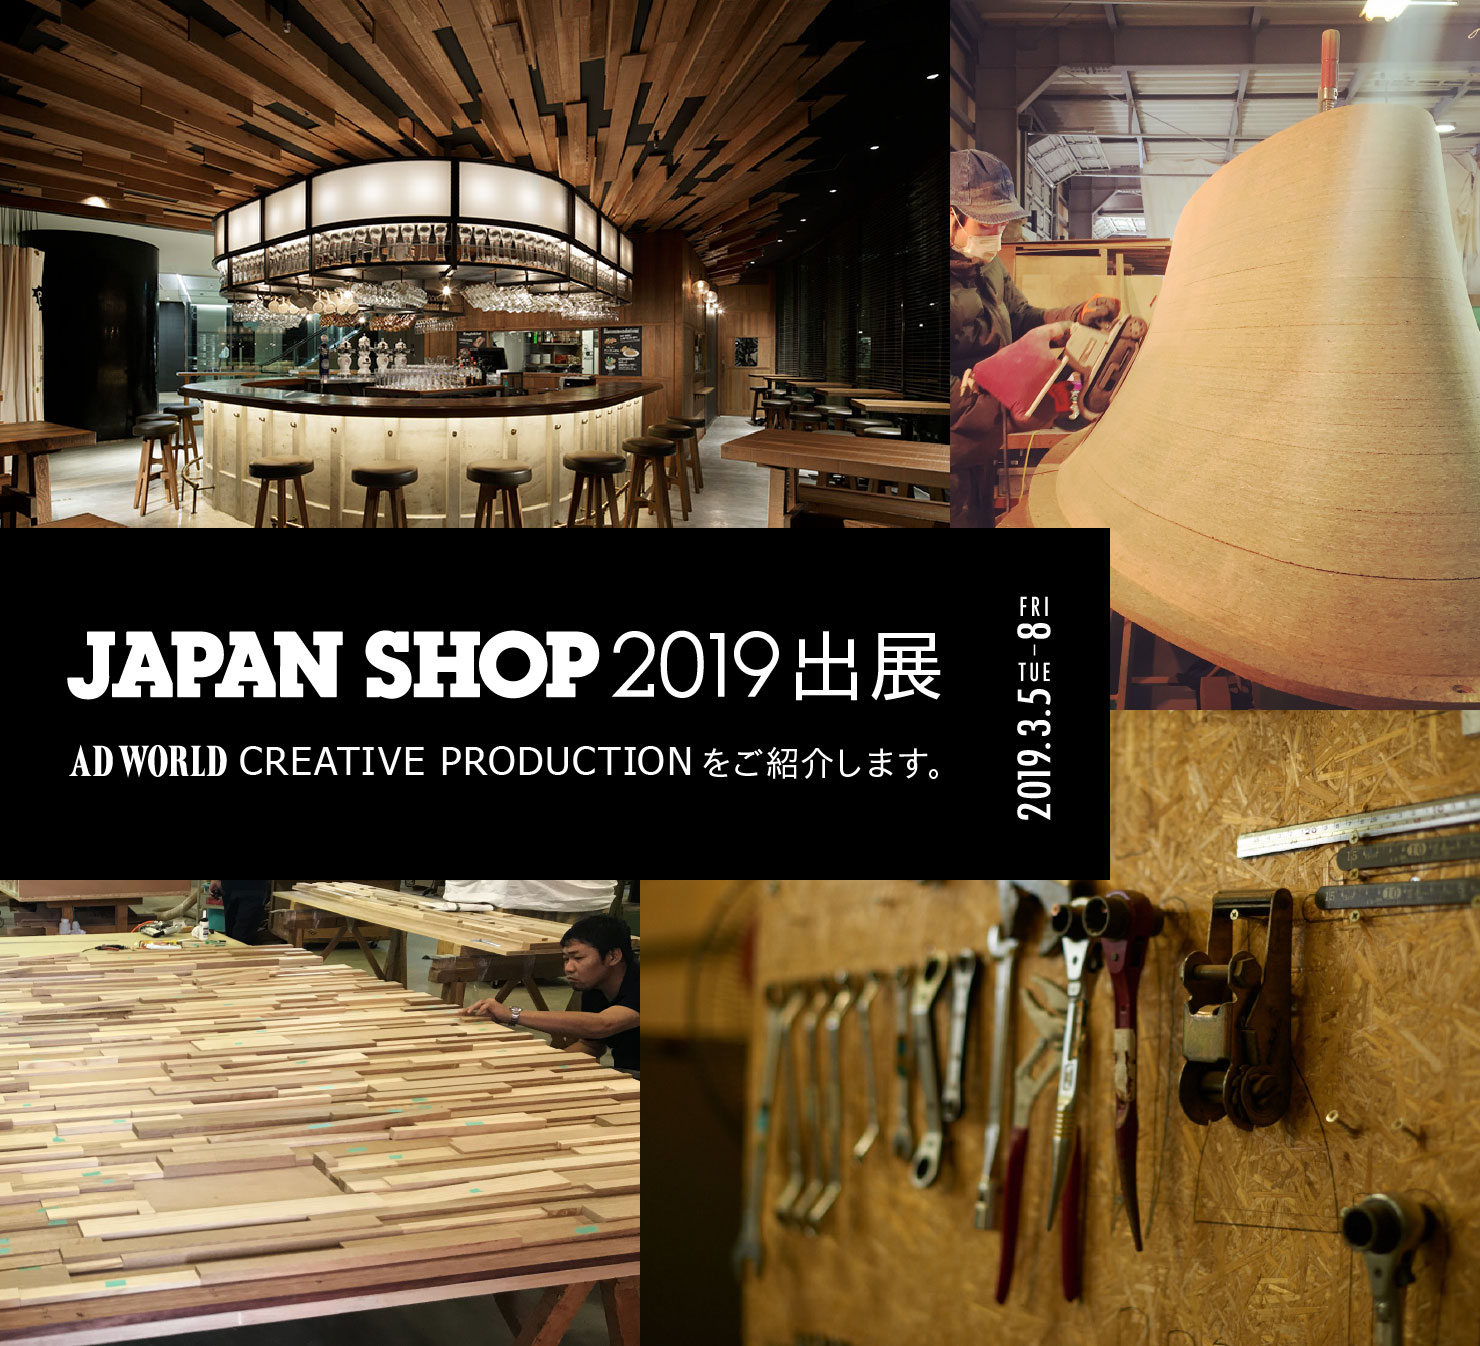 JAPAN SHOP 2019 出店 AD WORLD CREATIVE PRODUCTIONをご紹介します。